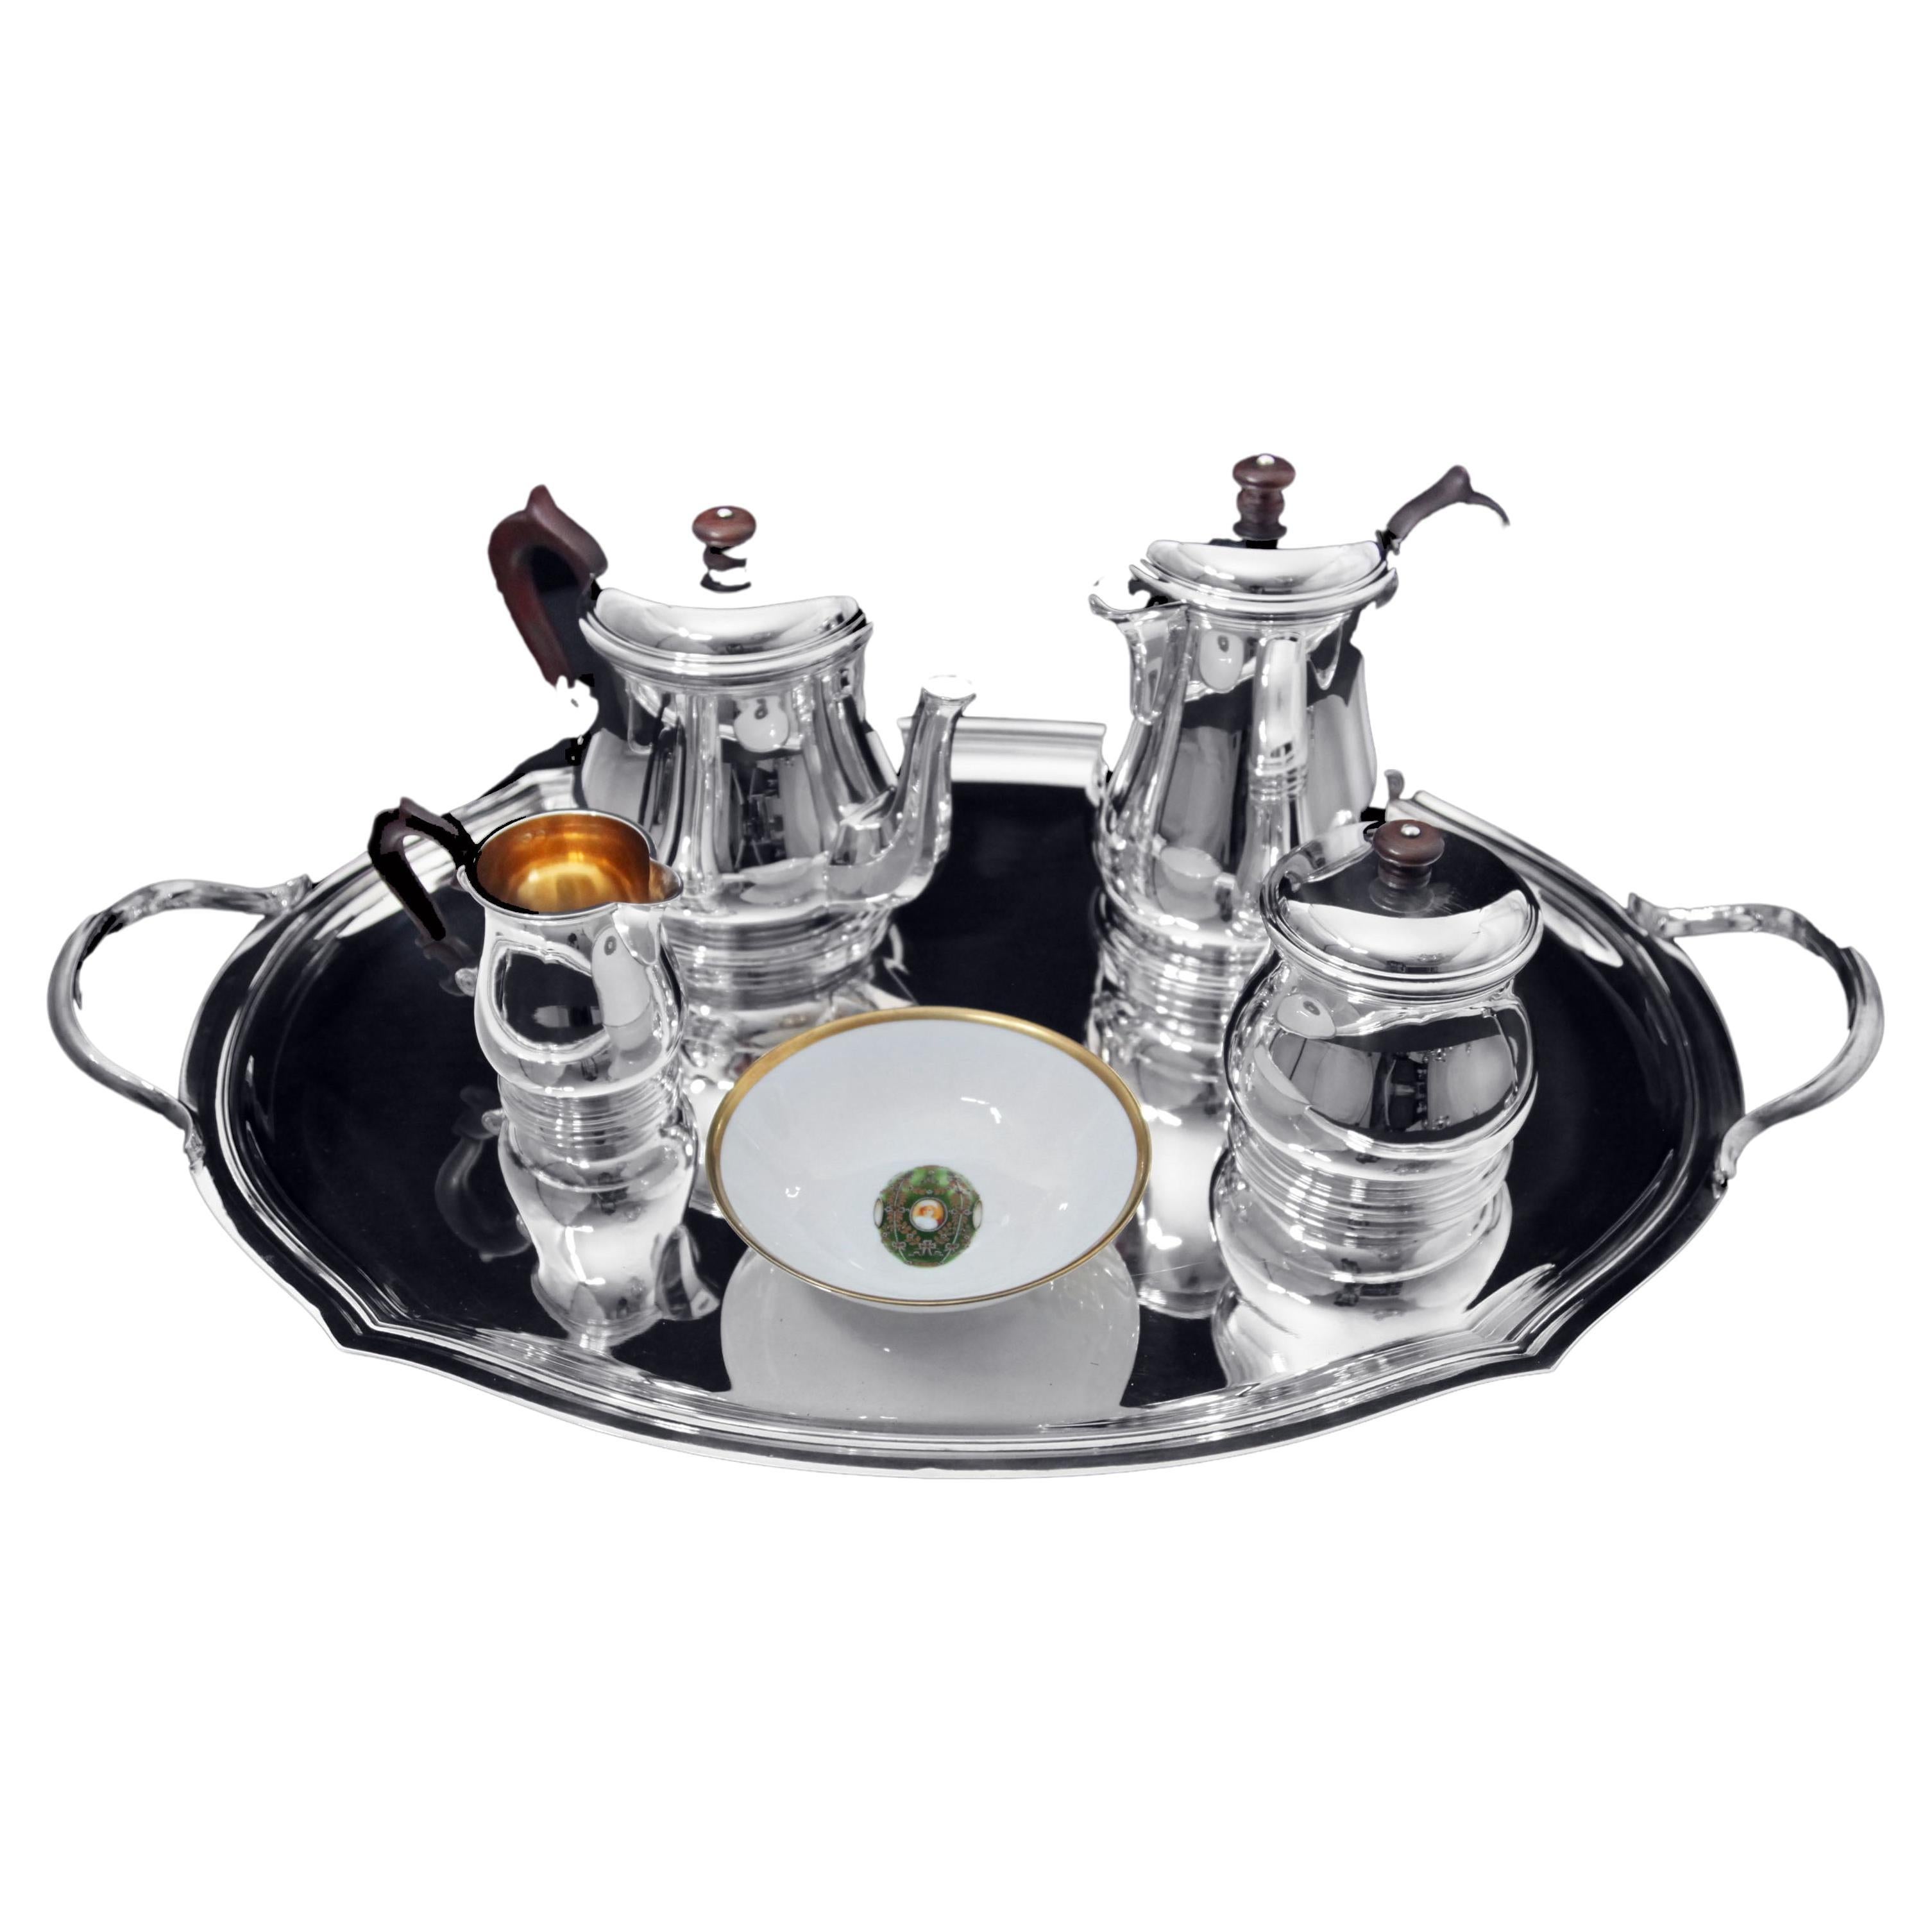 Puiforcat (Hermes), Christofle, Faberge - 5pc. French 950 Sterling Tea Set